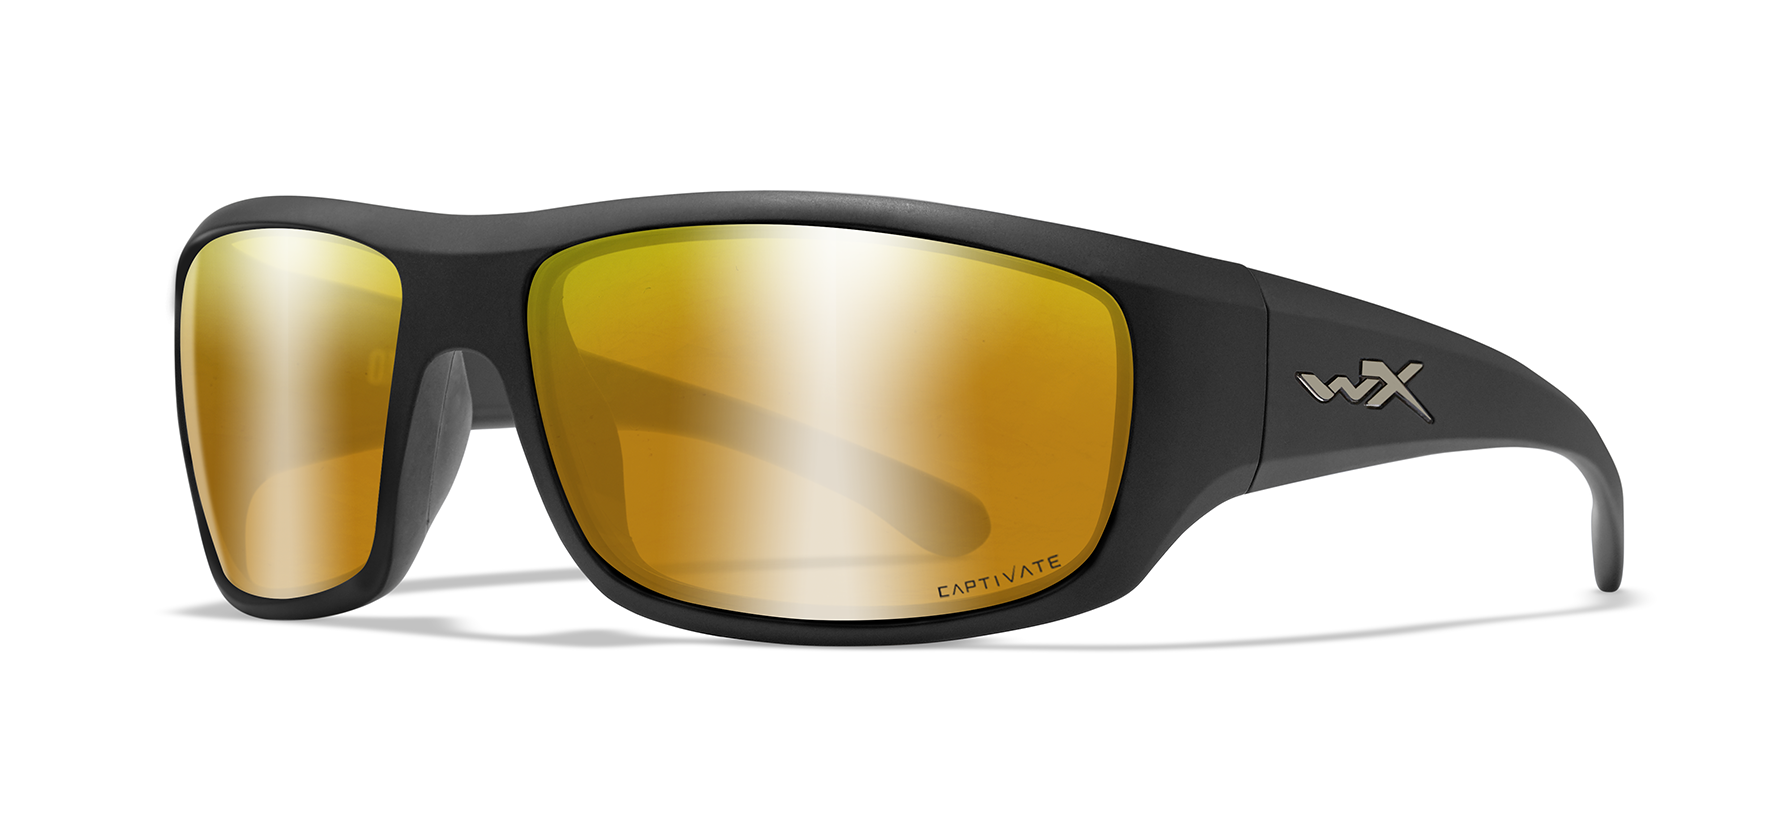 captivate polarized bronze mirror lenses in wiley x omega sunglasses